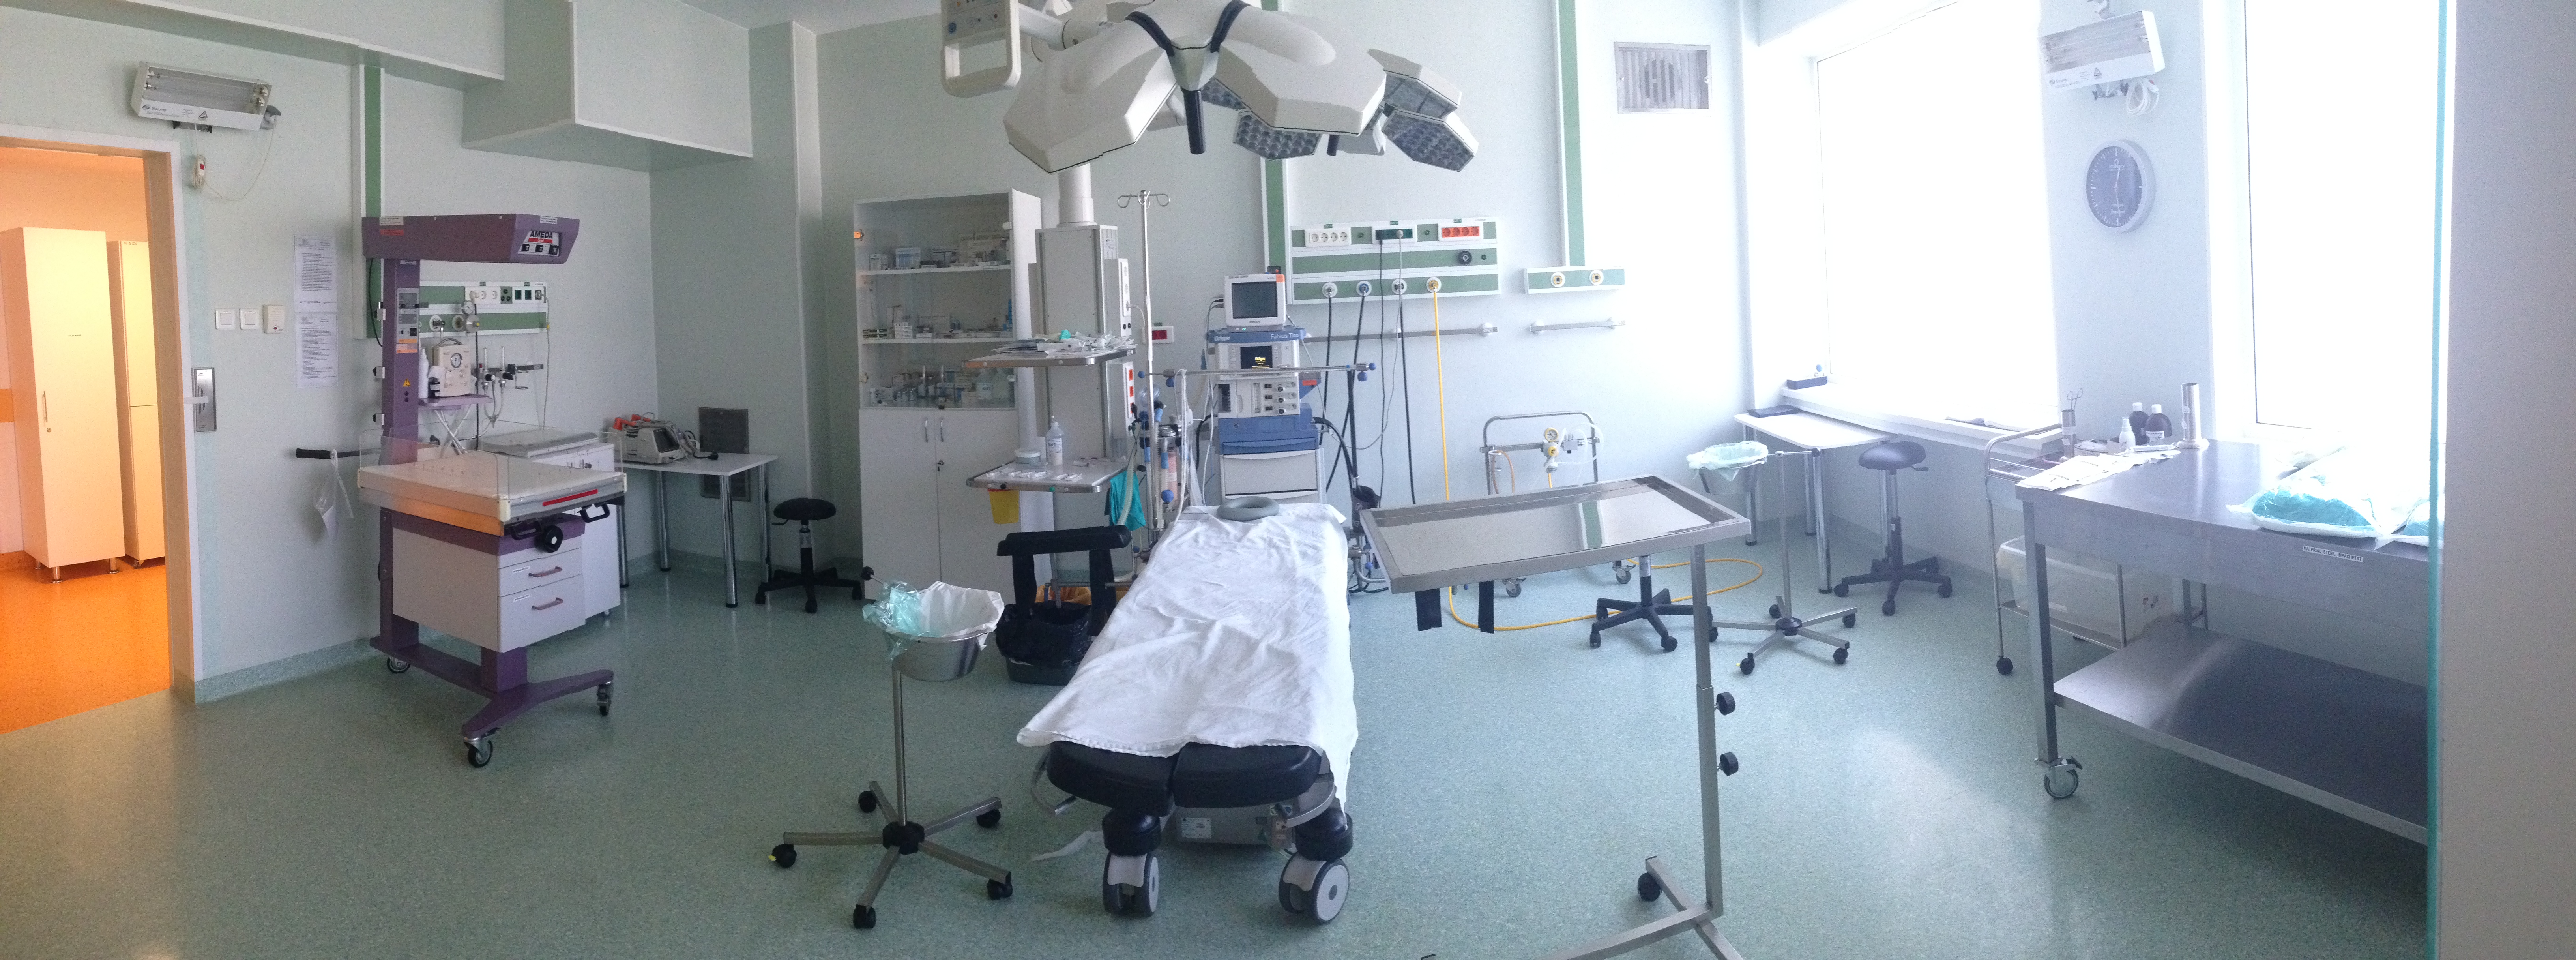 ARMONIA HOSPITAL – Primul spital privat din Constanța